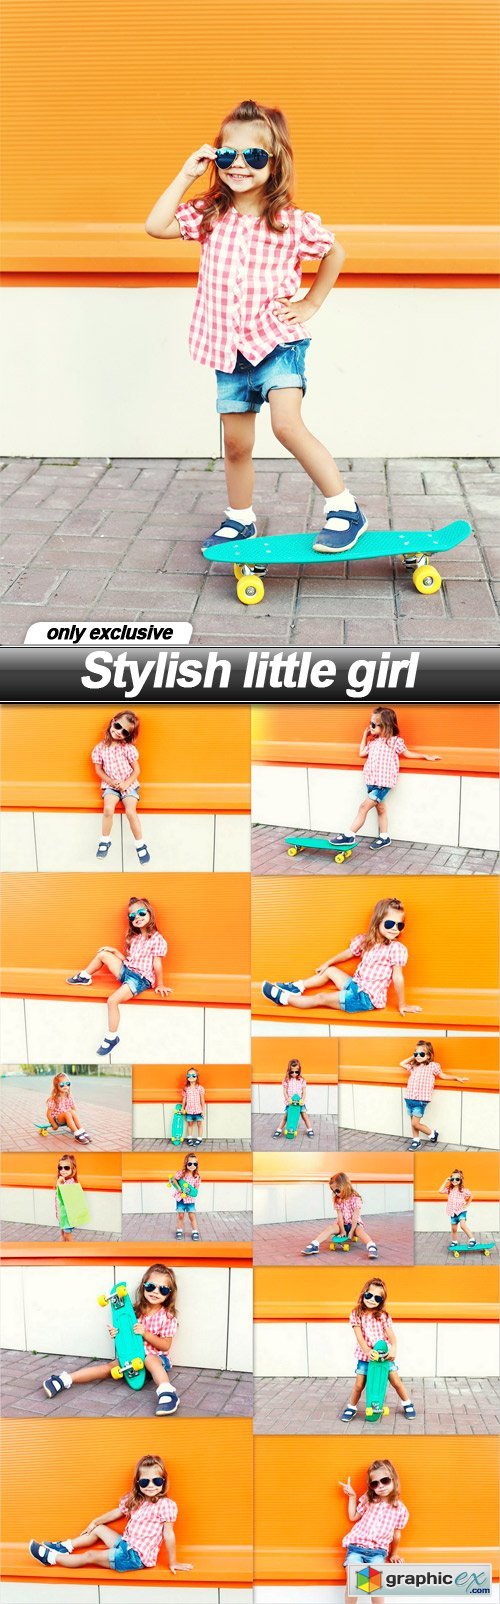 Stylish little girl - 16 UHQ JPEG